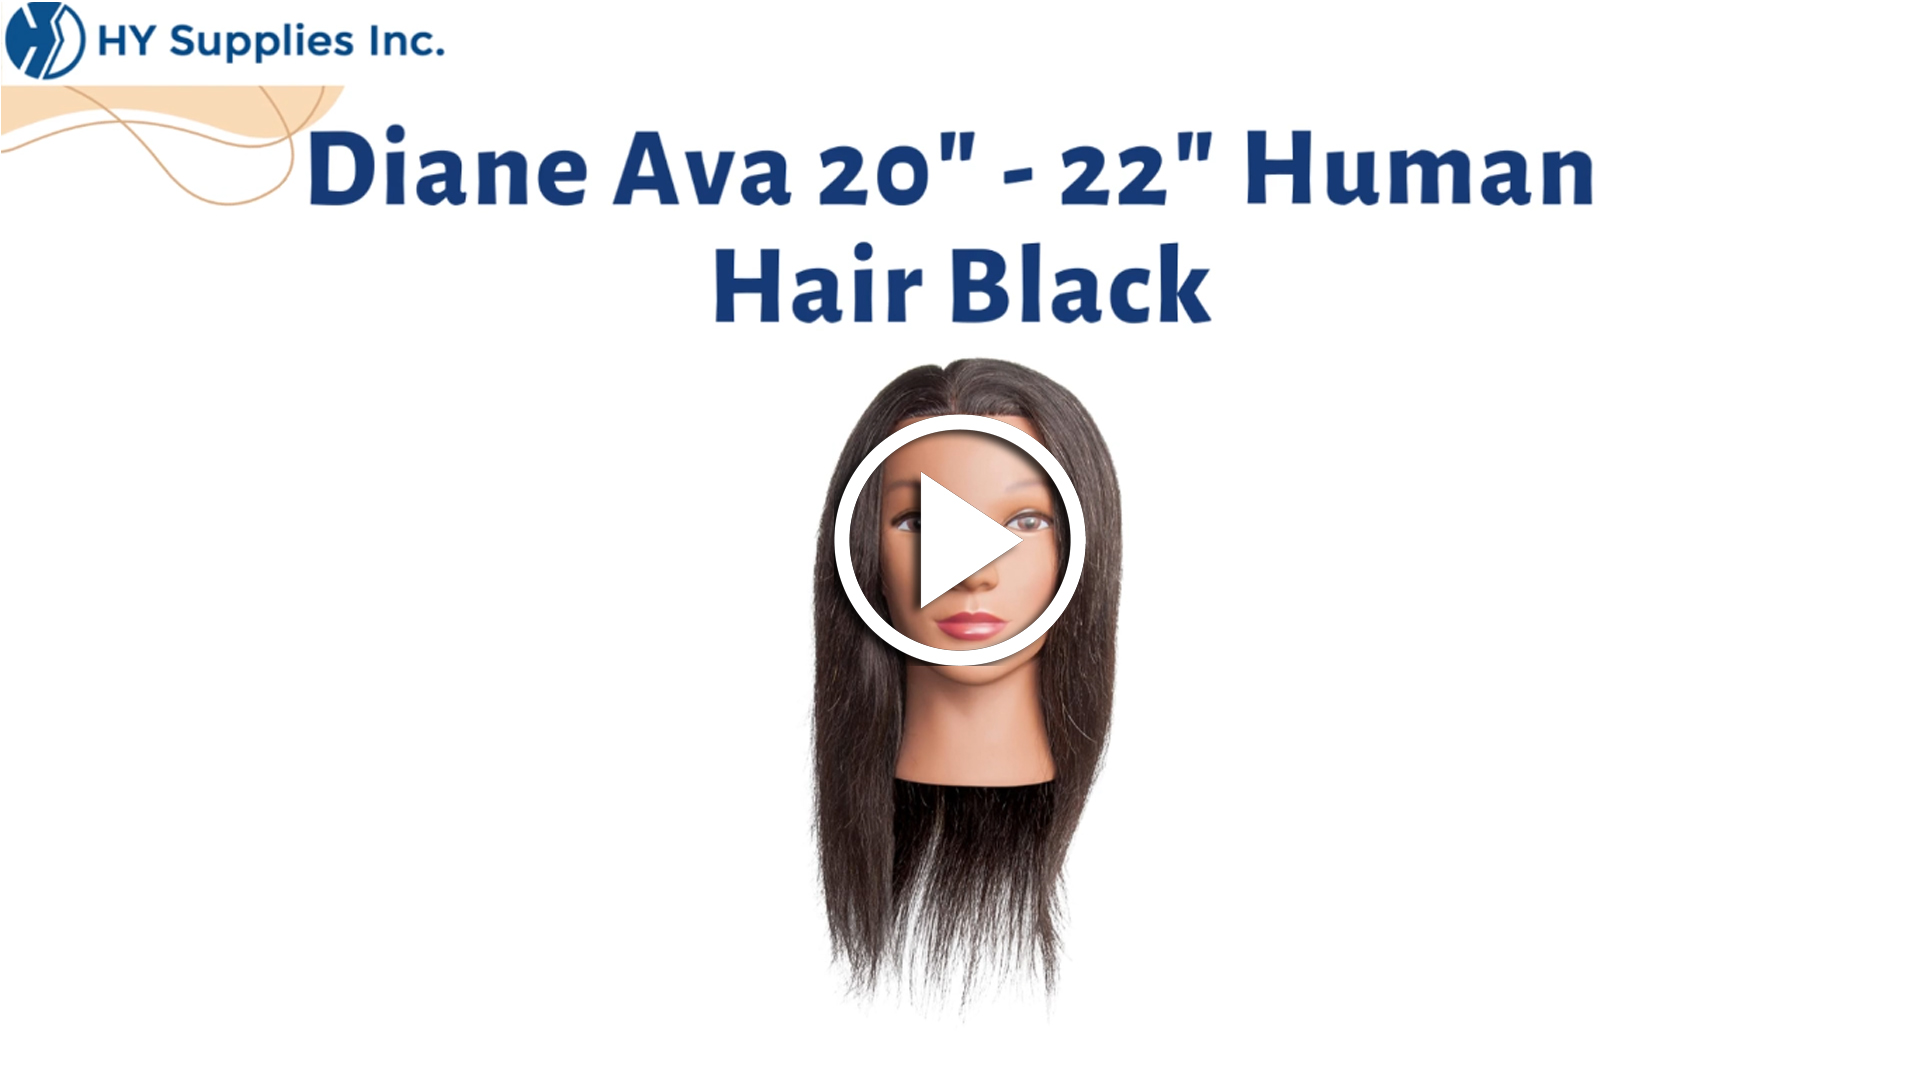 Diane Ava 20" - 22"Human Hair Black